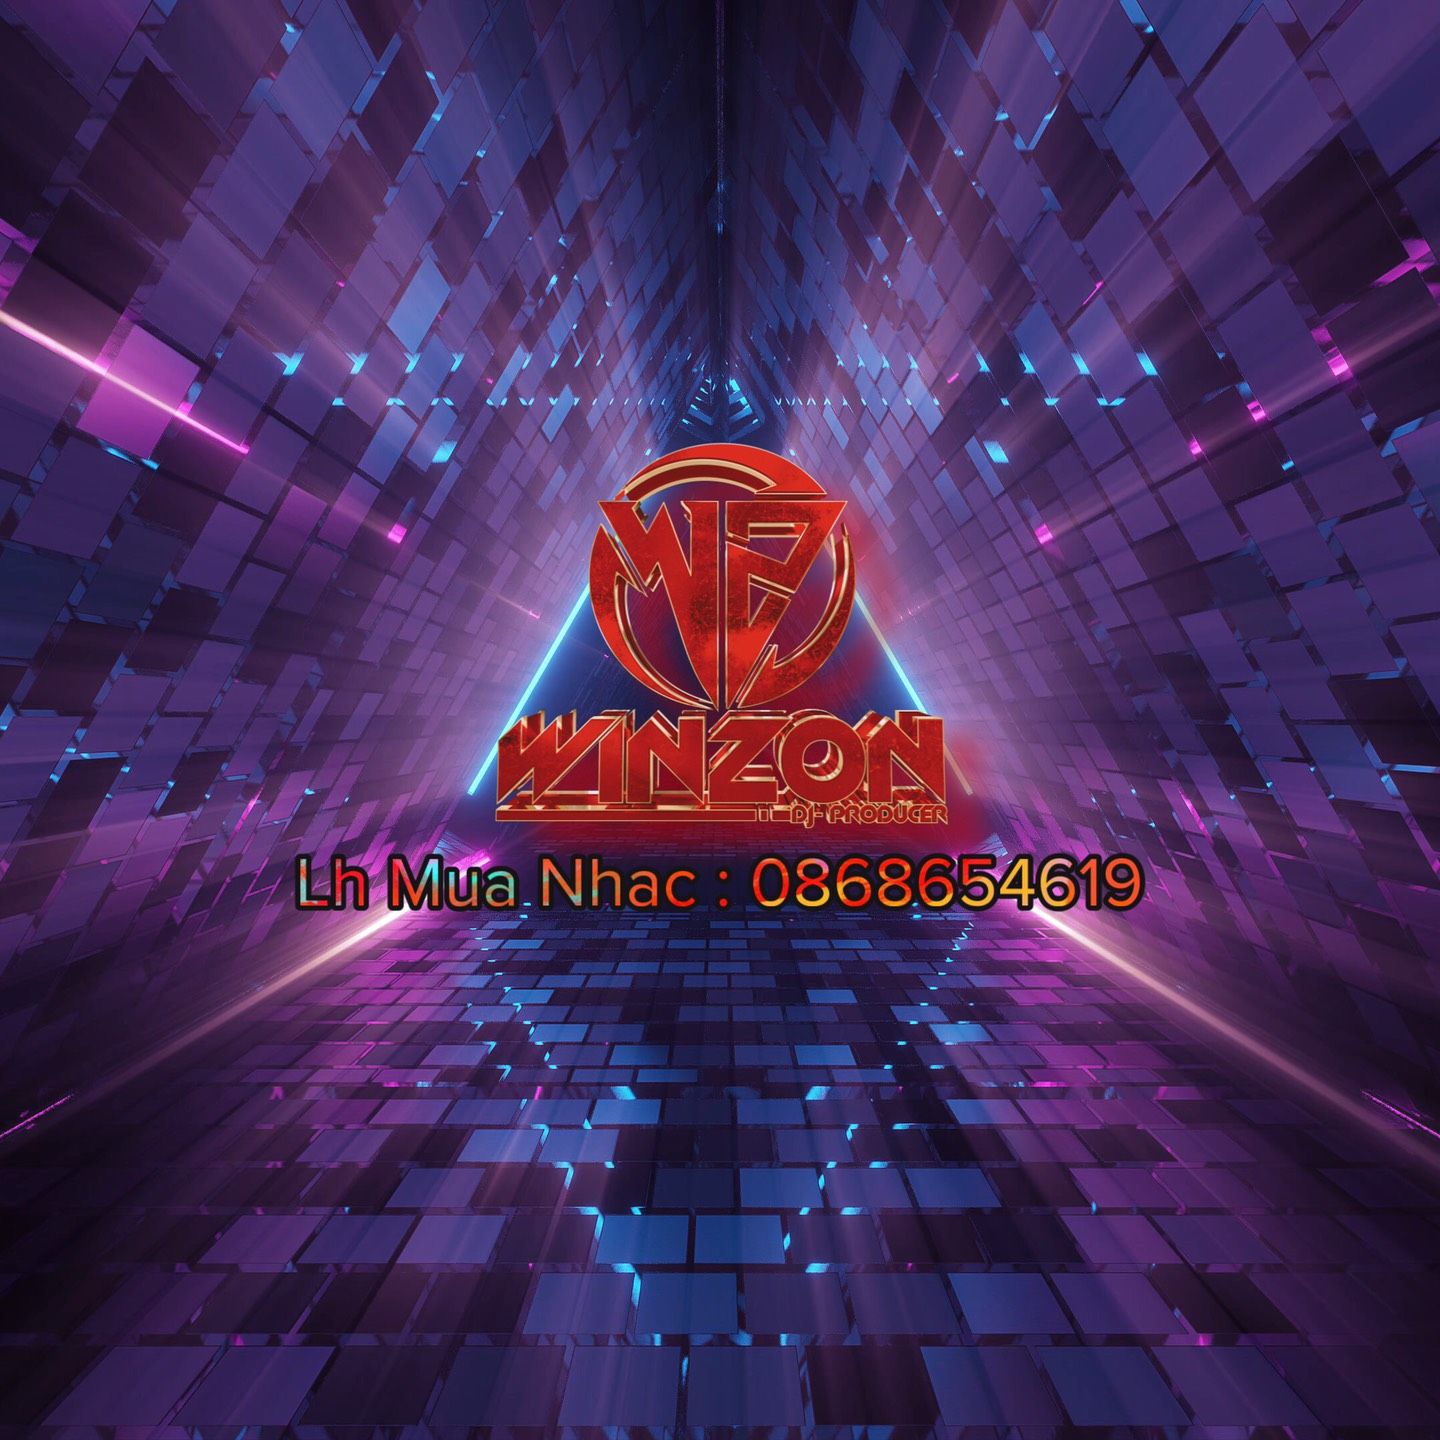 I-download Anaconda 2021 - Winzon Remix